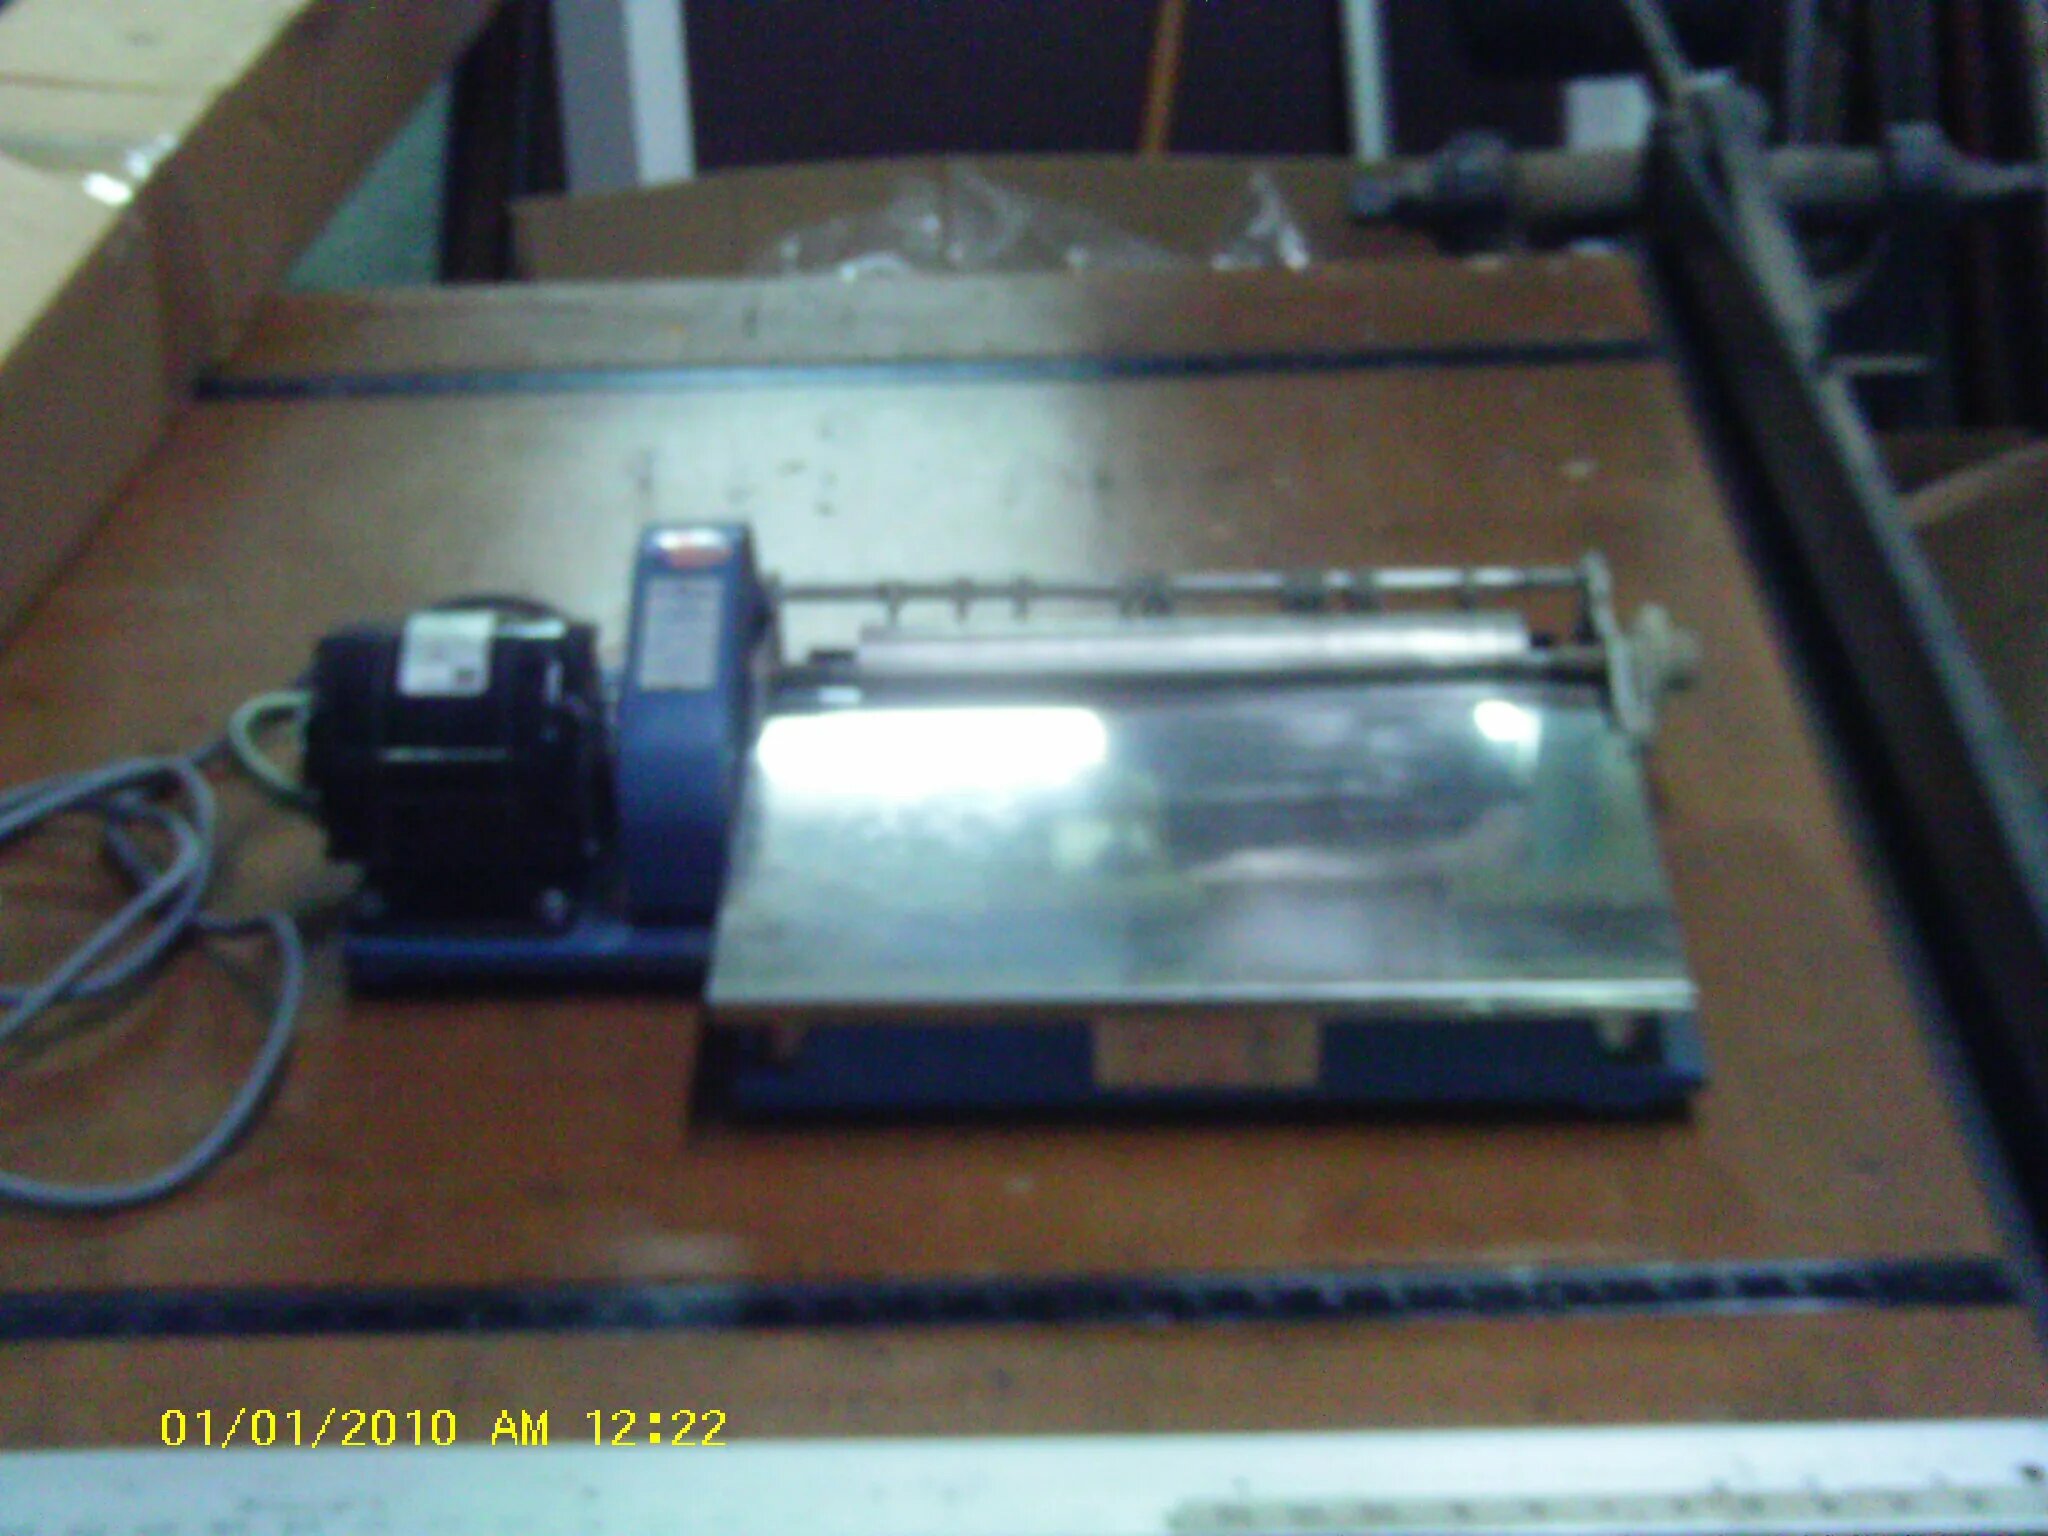 Equipment Lot: Potdevin NTZ27 Cold Gluer, W30 Rotary Press, & Schaefer 12″ Label Cementer (x2) (Used) Item # UE-042120E (CT)